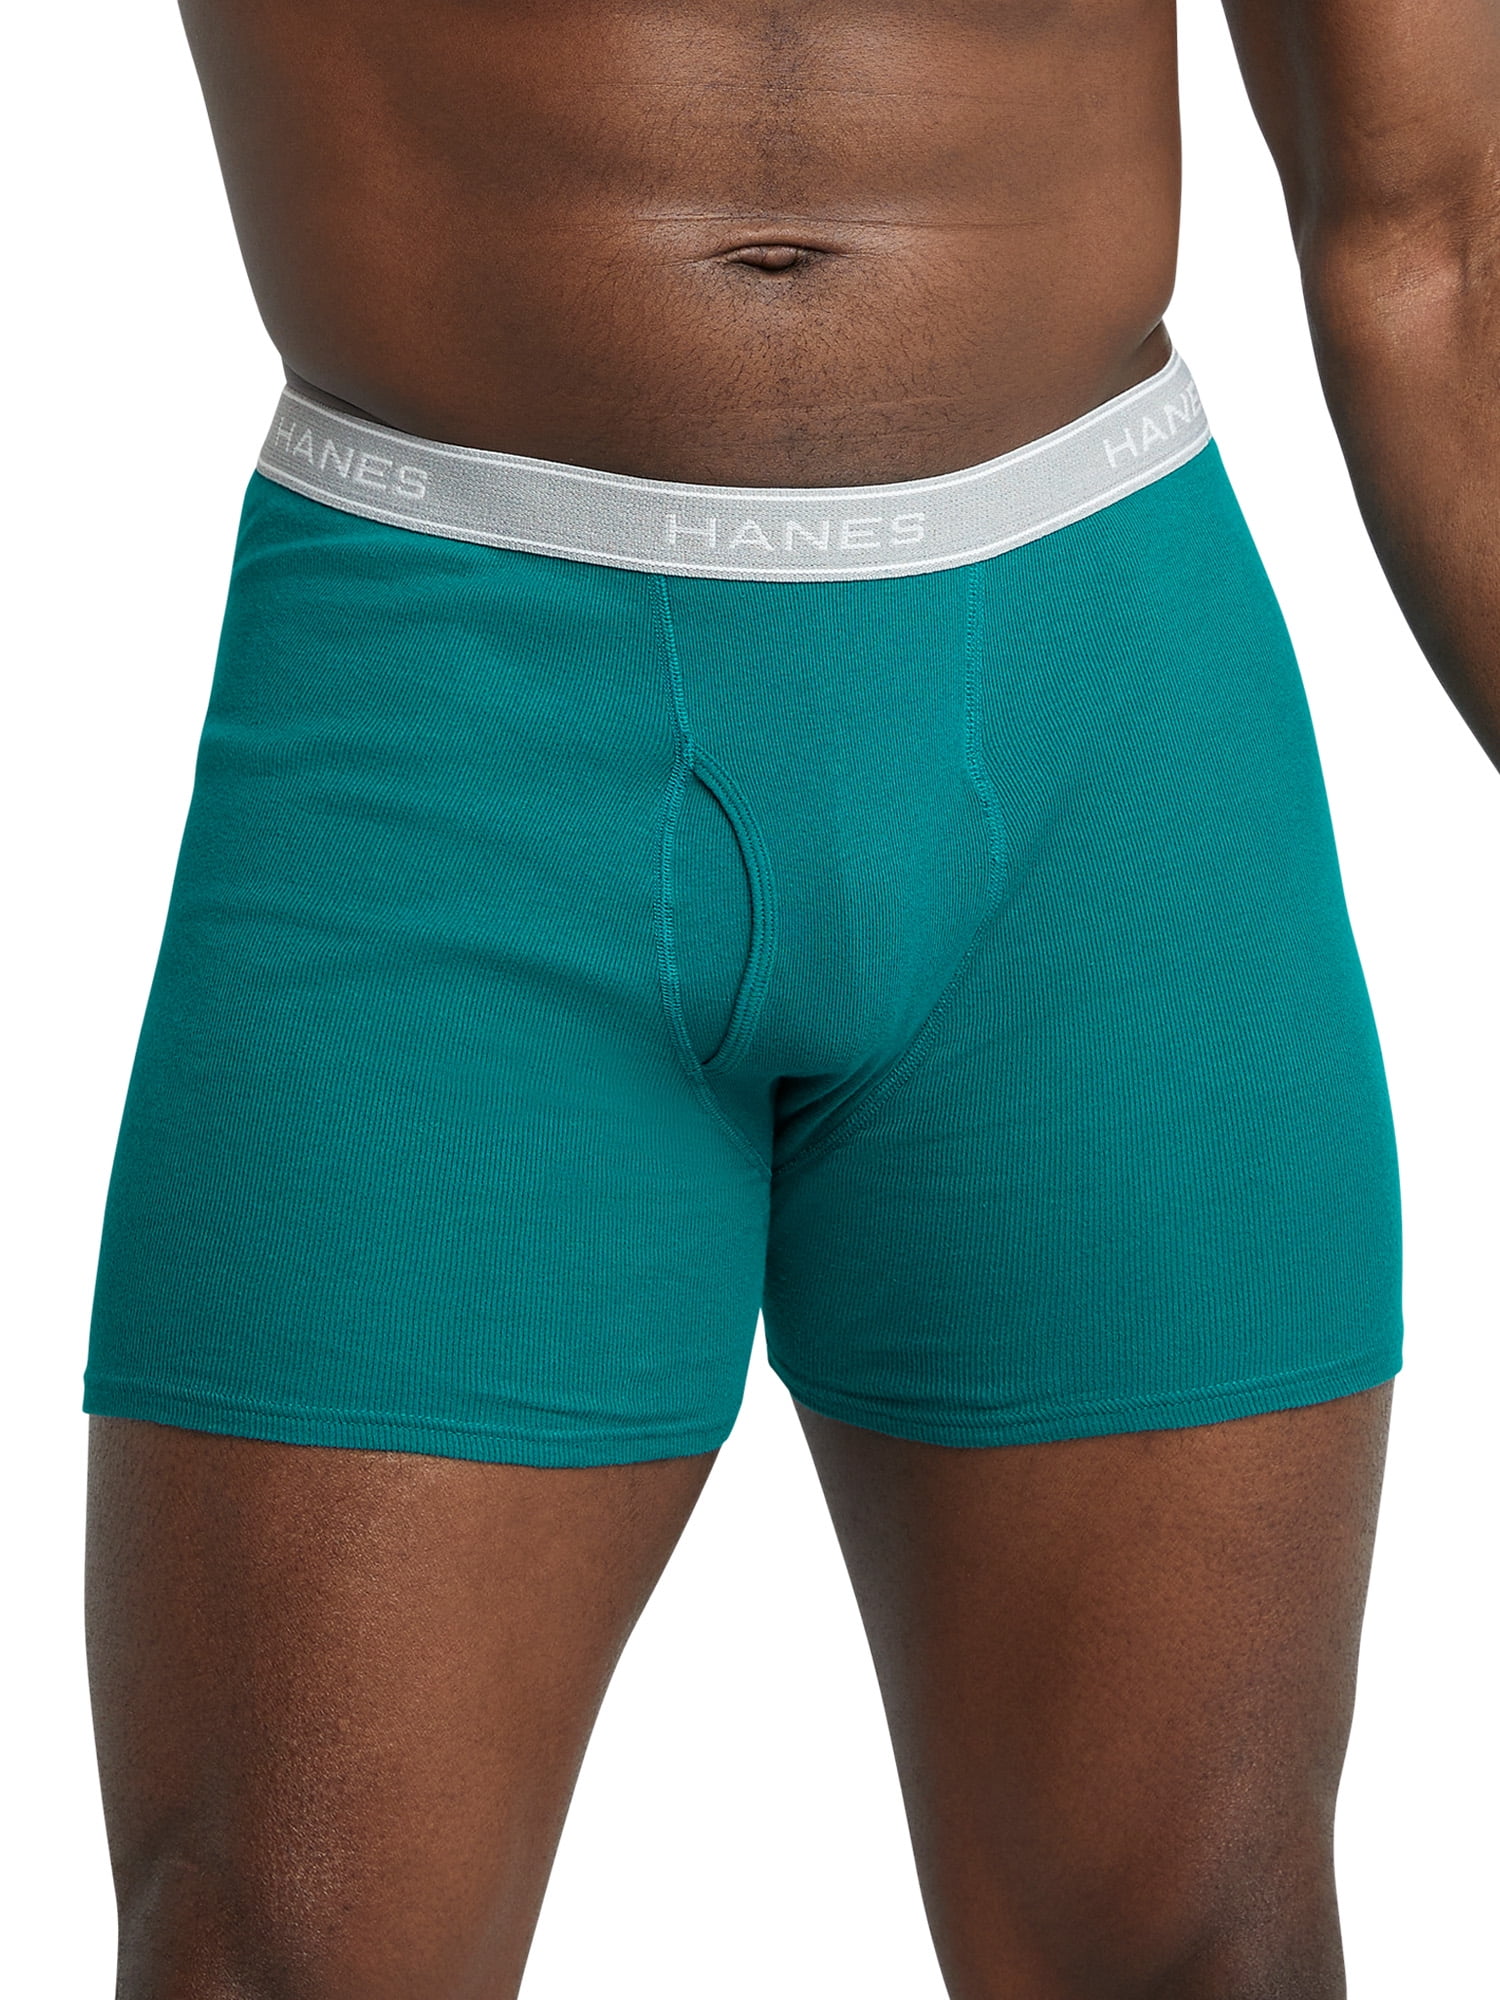 Kmart: Men's Underwear Sale = Hanes Multipacks Only $8.62 Each + Earn $4 In  Shop Your Way Points